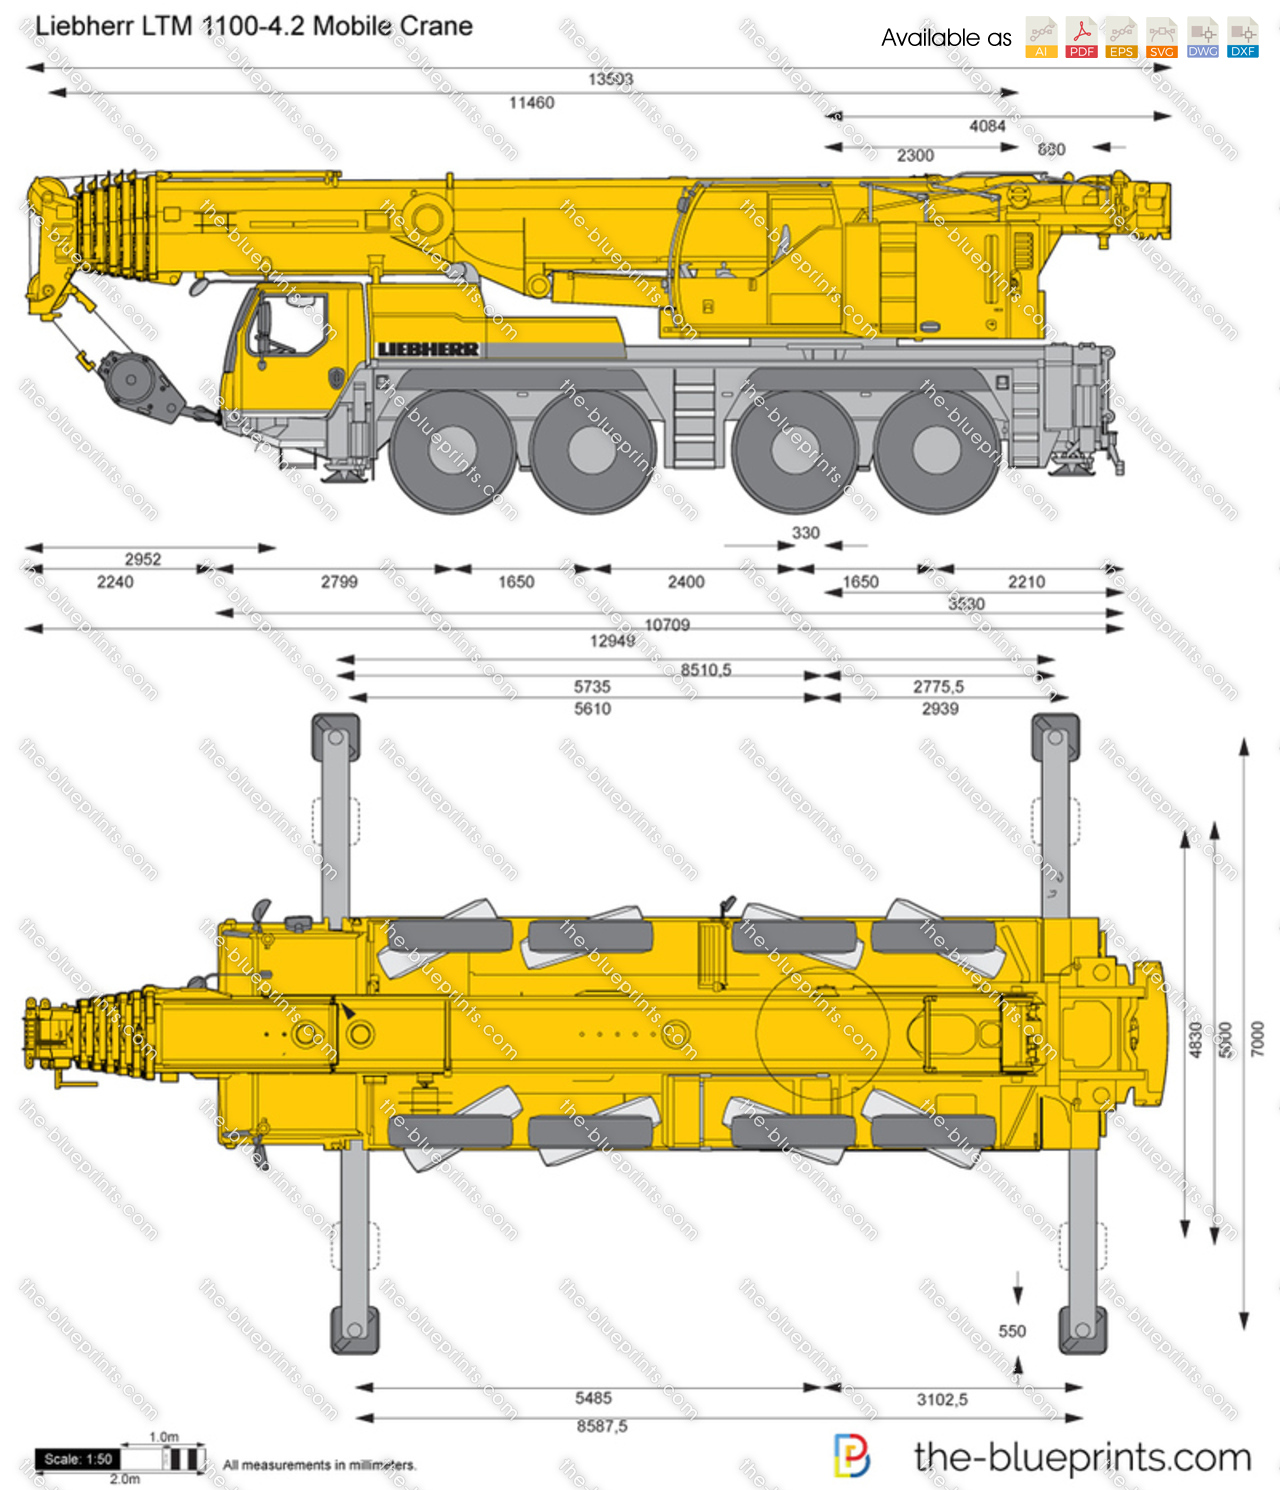 Liebherr LTM 1100-4.2 Mobile Crane